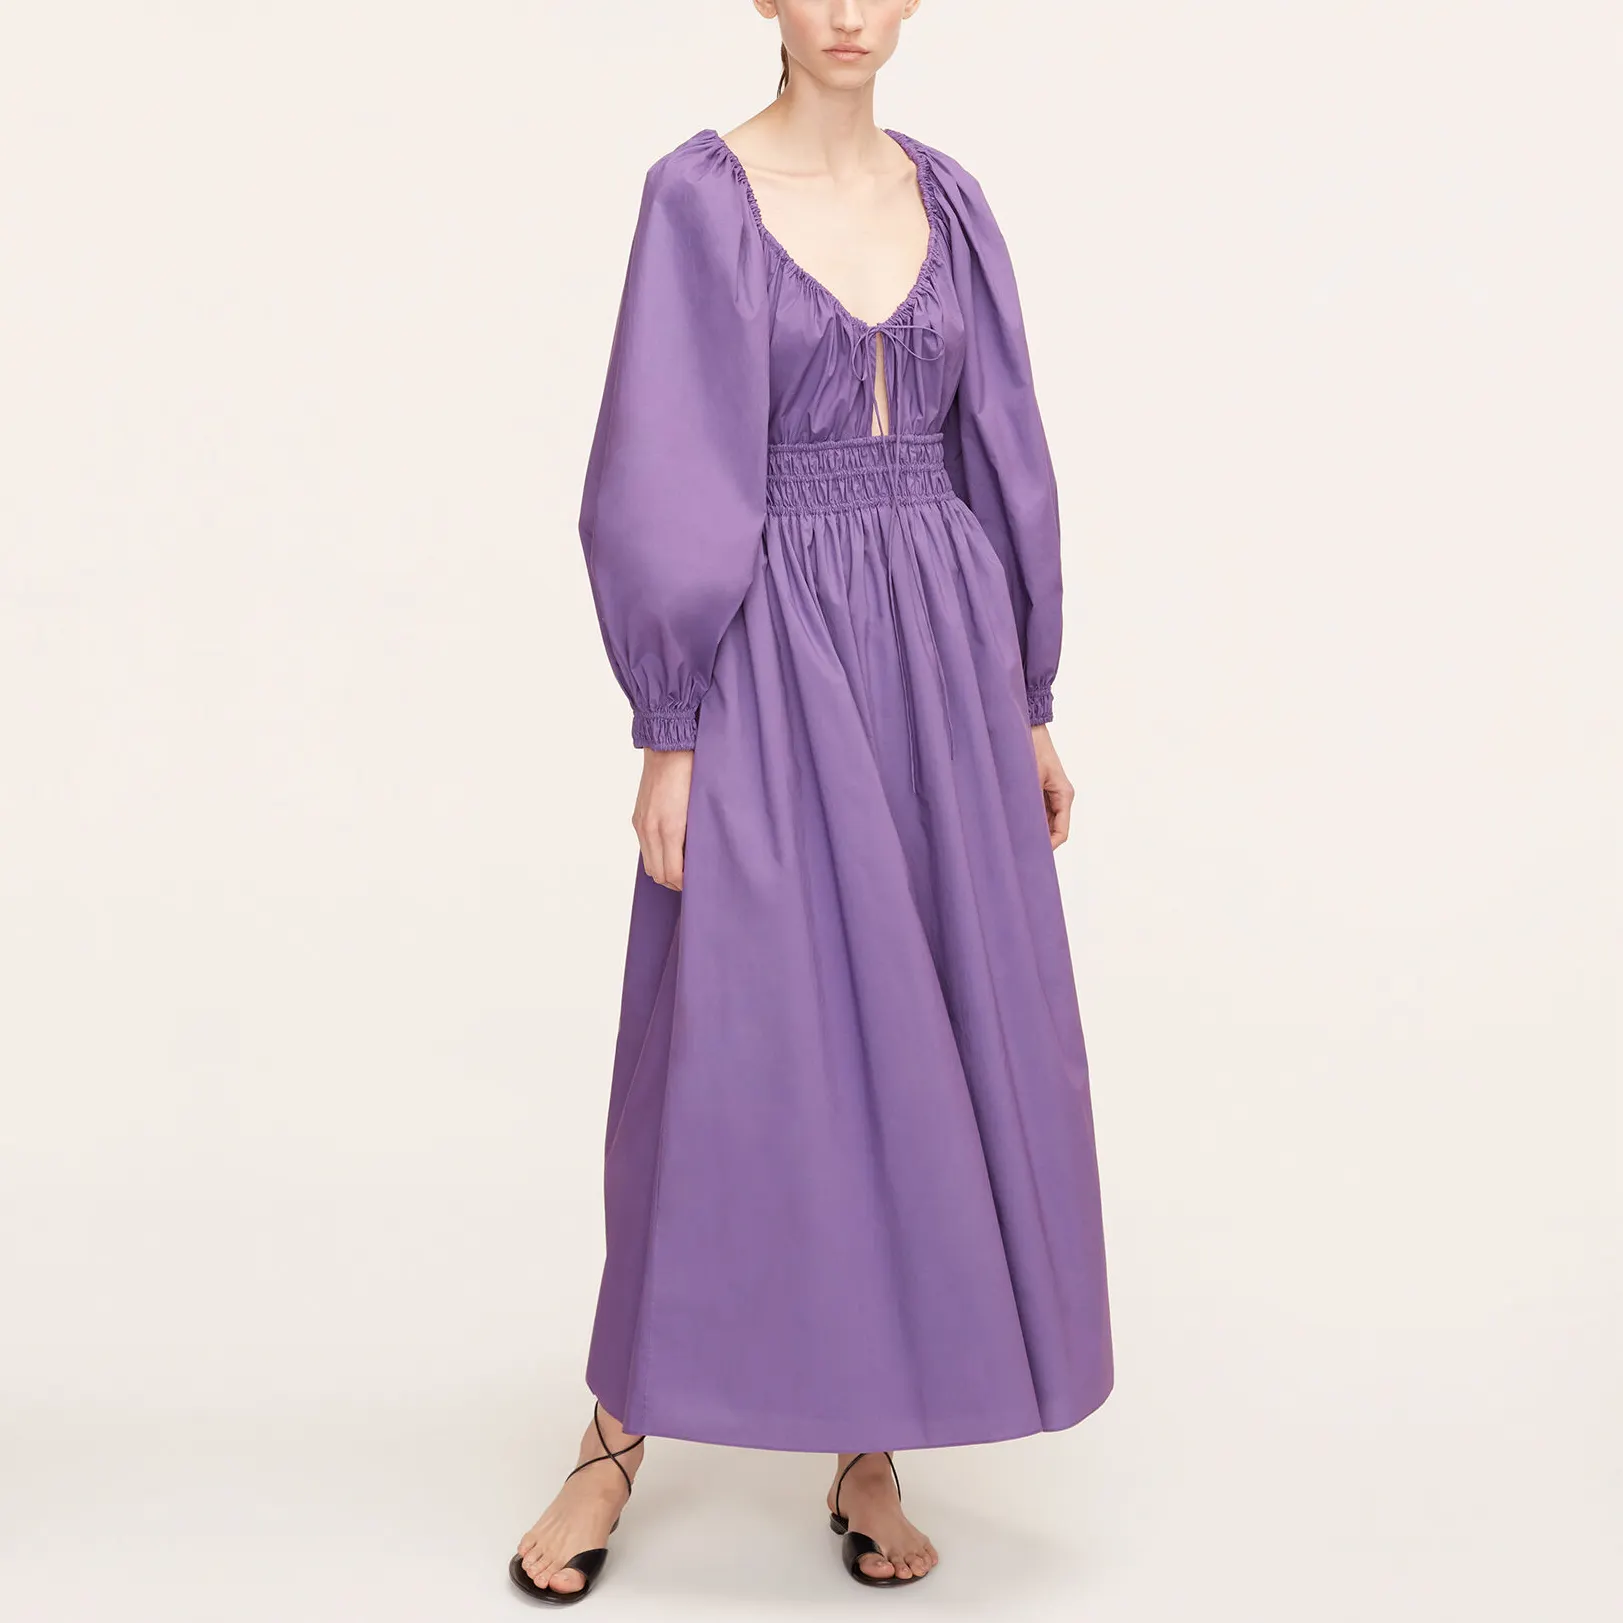 New Arrival Fashion Clothes High Quality Cotton Linen Plain Lavender Color Deep V Neck Long Puff Sleeve Maxi Dress For Women